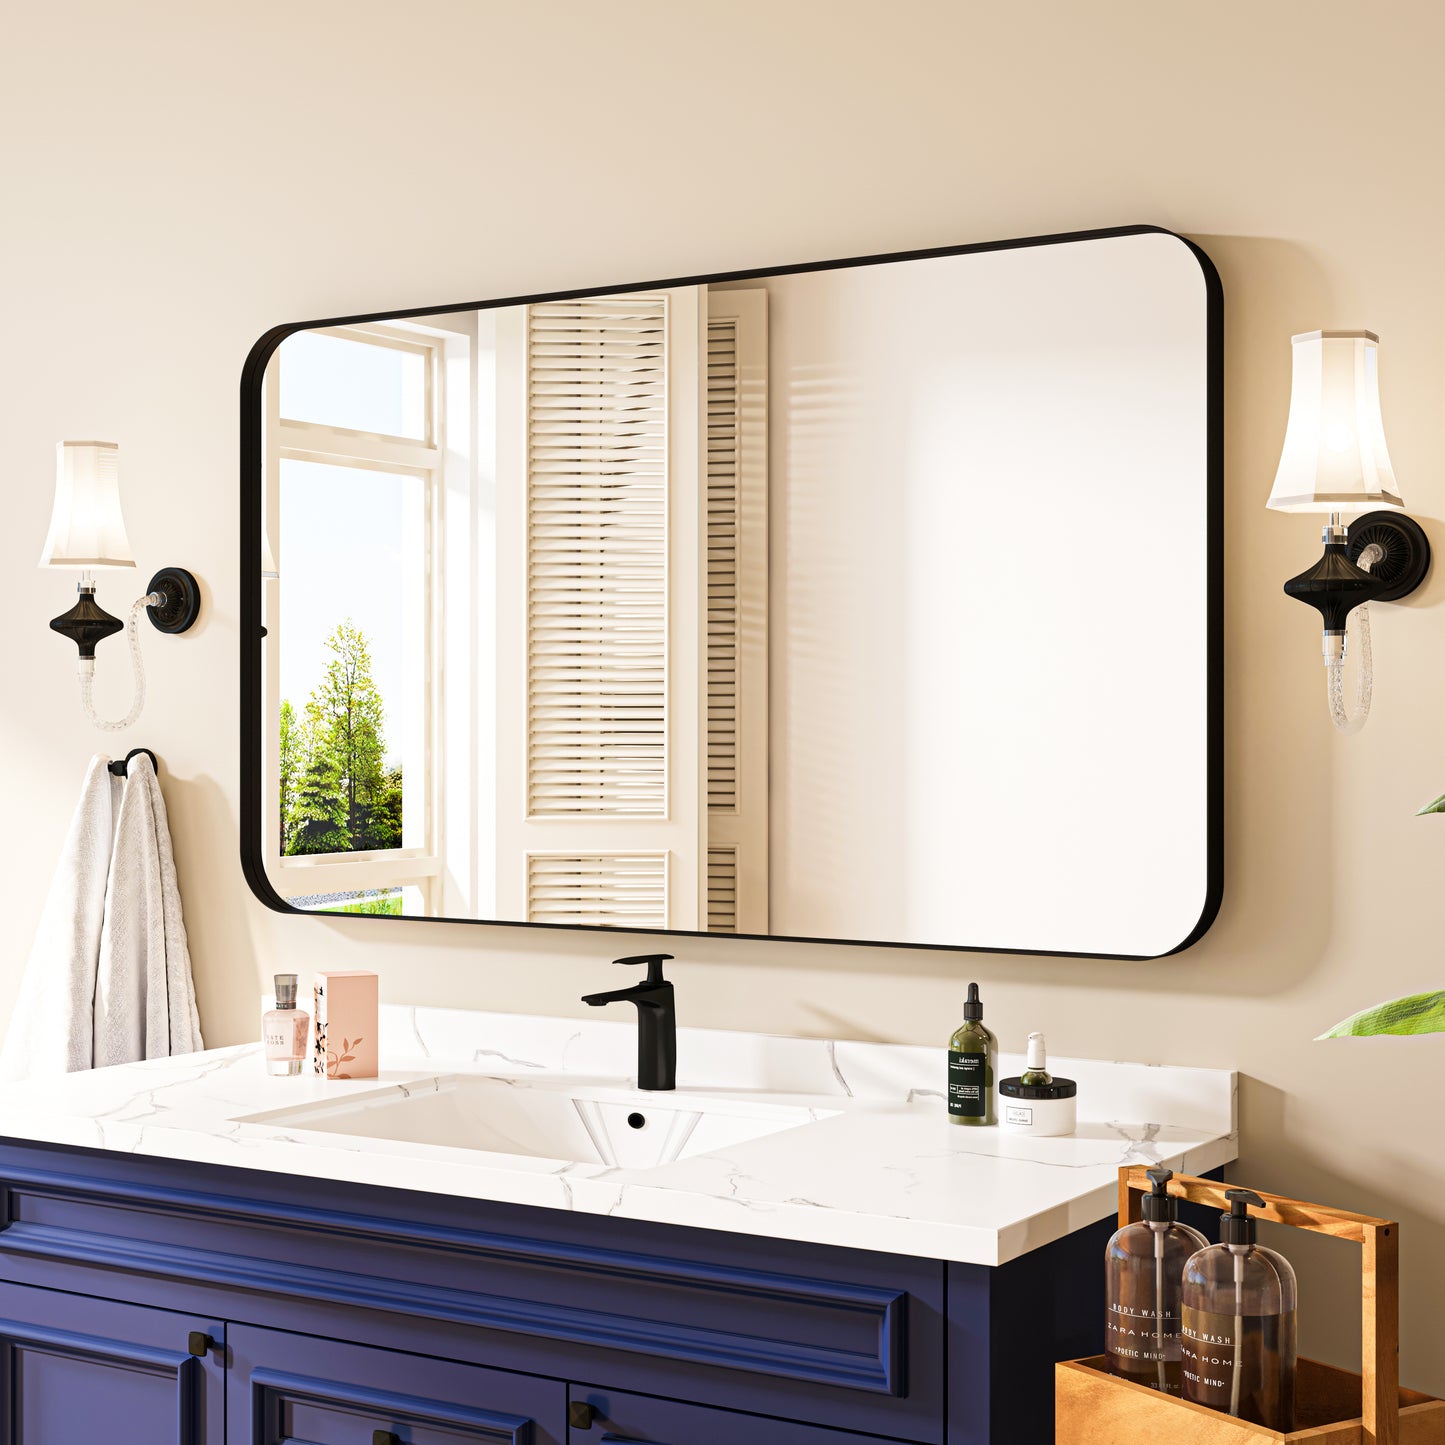 Waterpar® 52 in. W x 30 in. H Rectangular Aluminum Framed Wall Bathroom Vanity Mirror